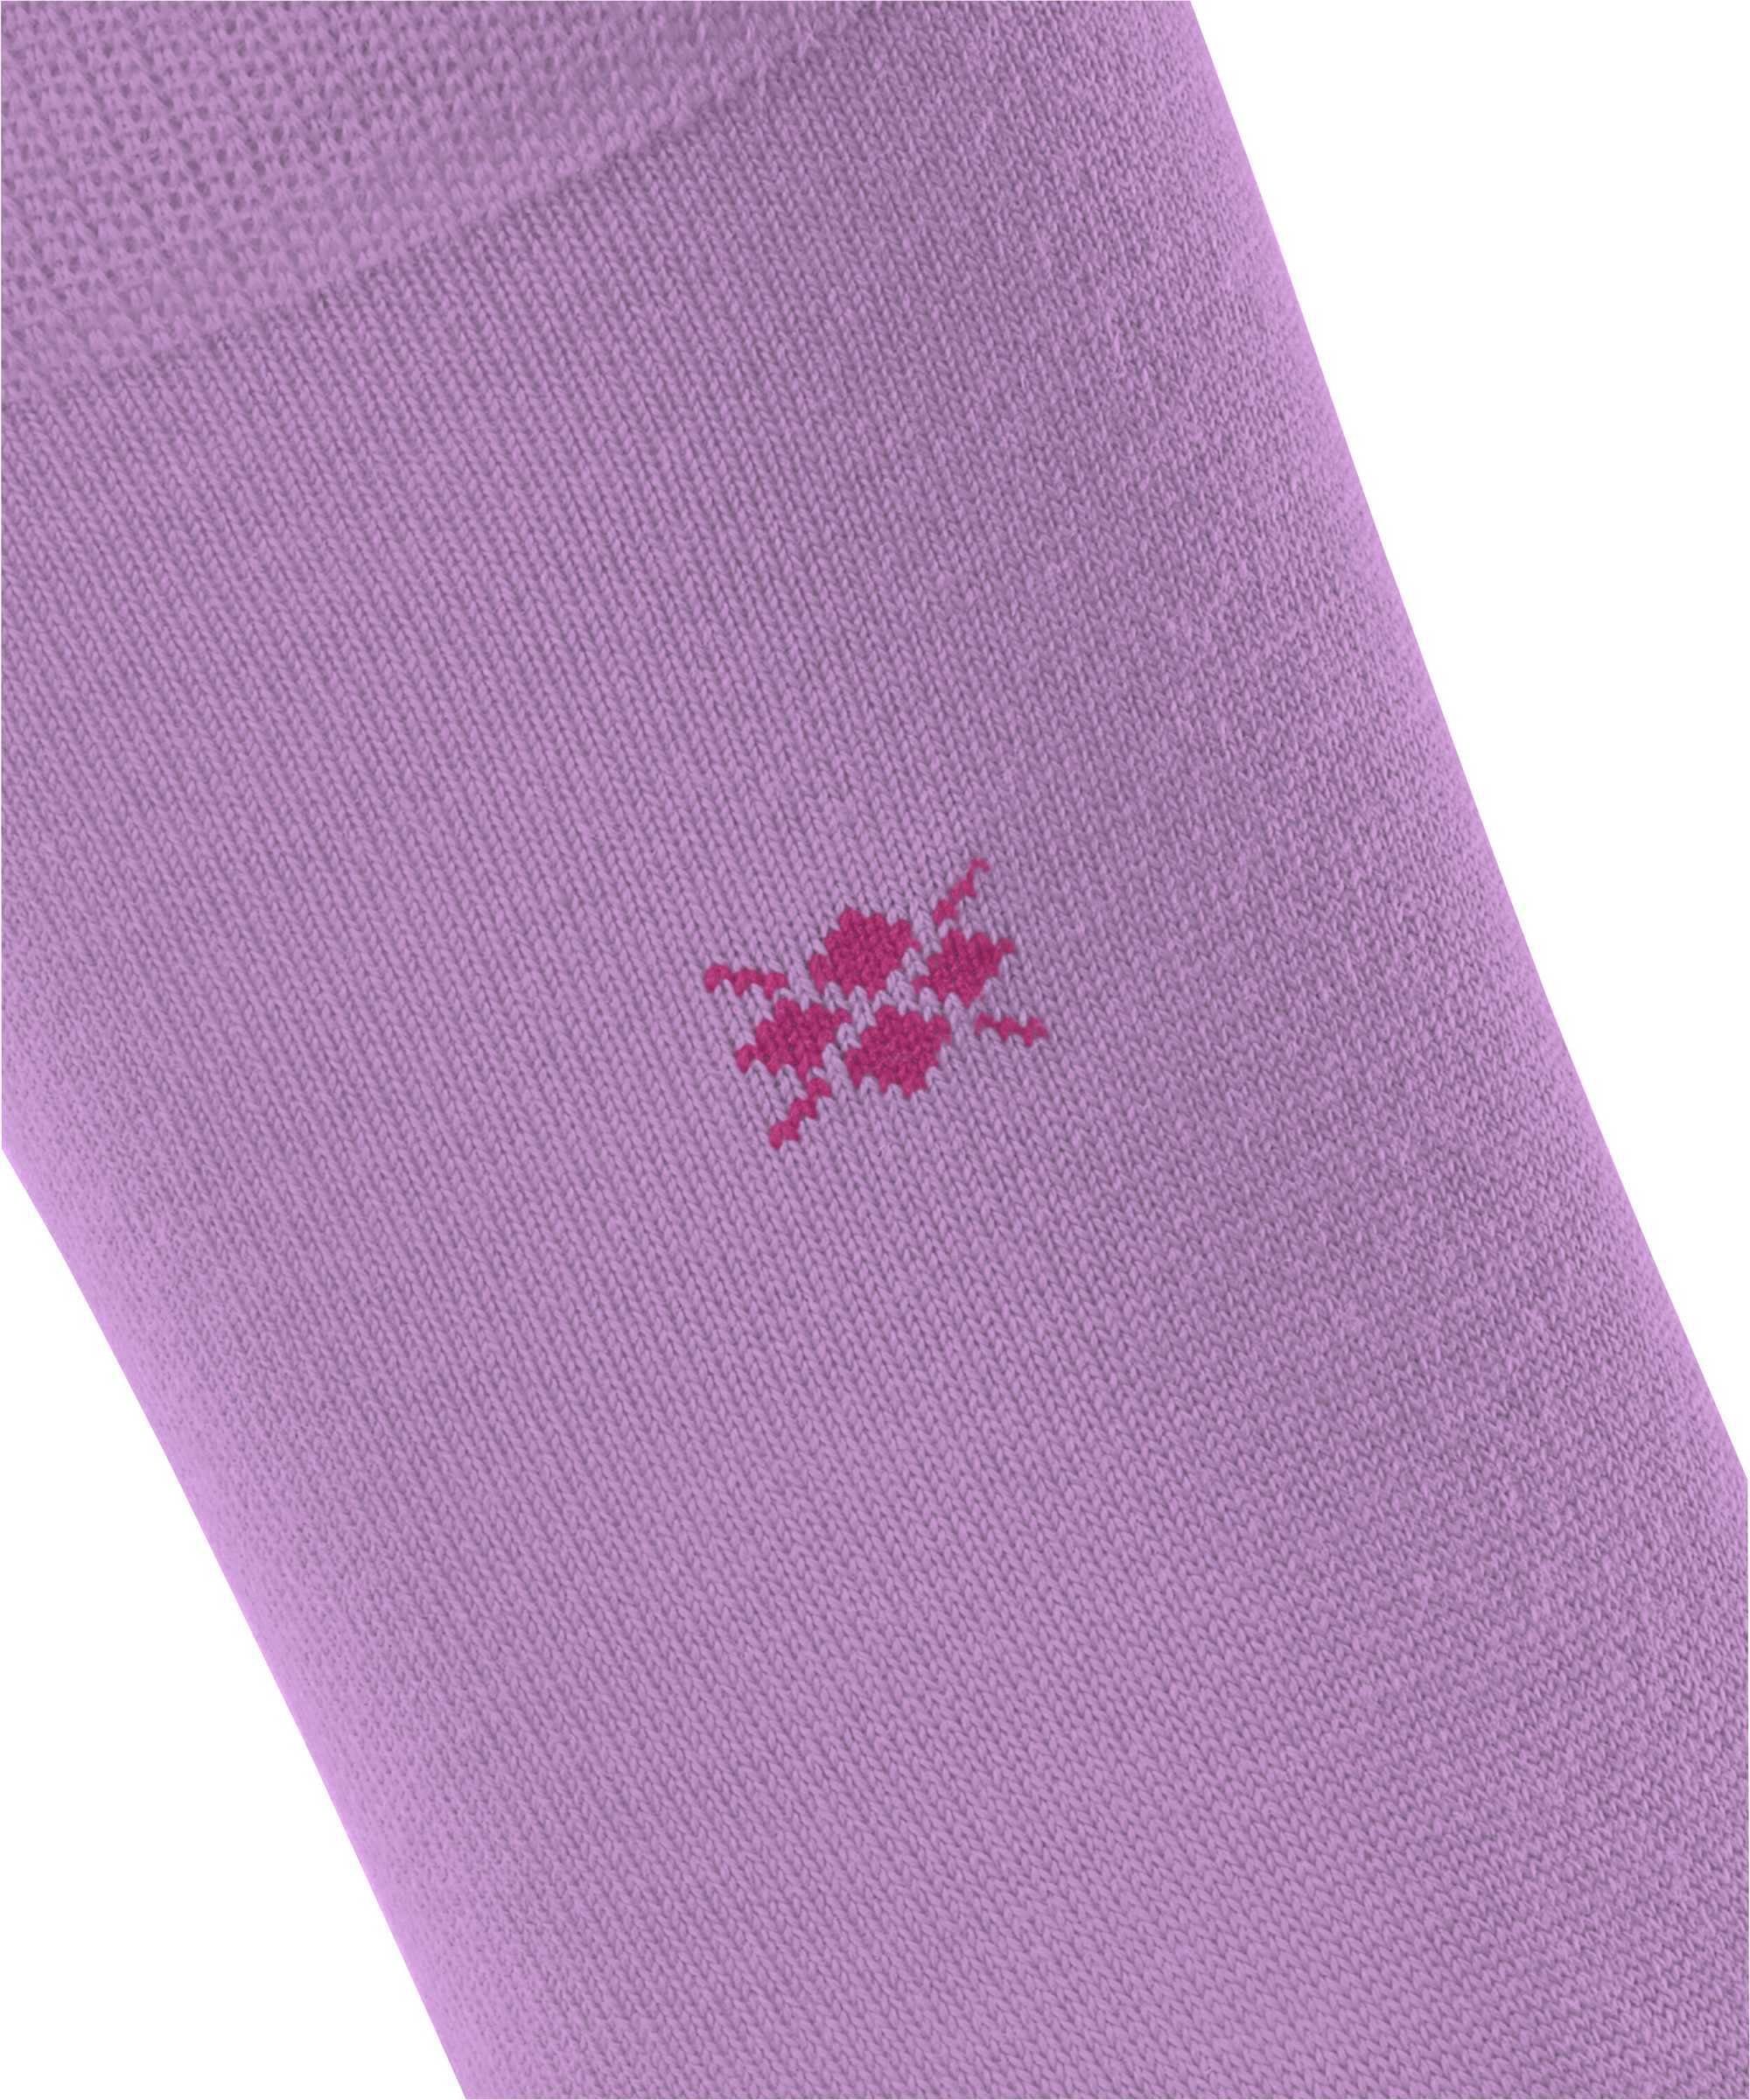 Socken Damen Kurzsocken Burlington - Lila Schurwolle, Uni, BLOOMSBURY Logo